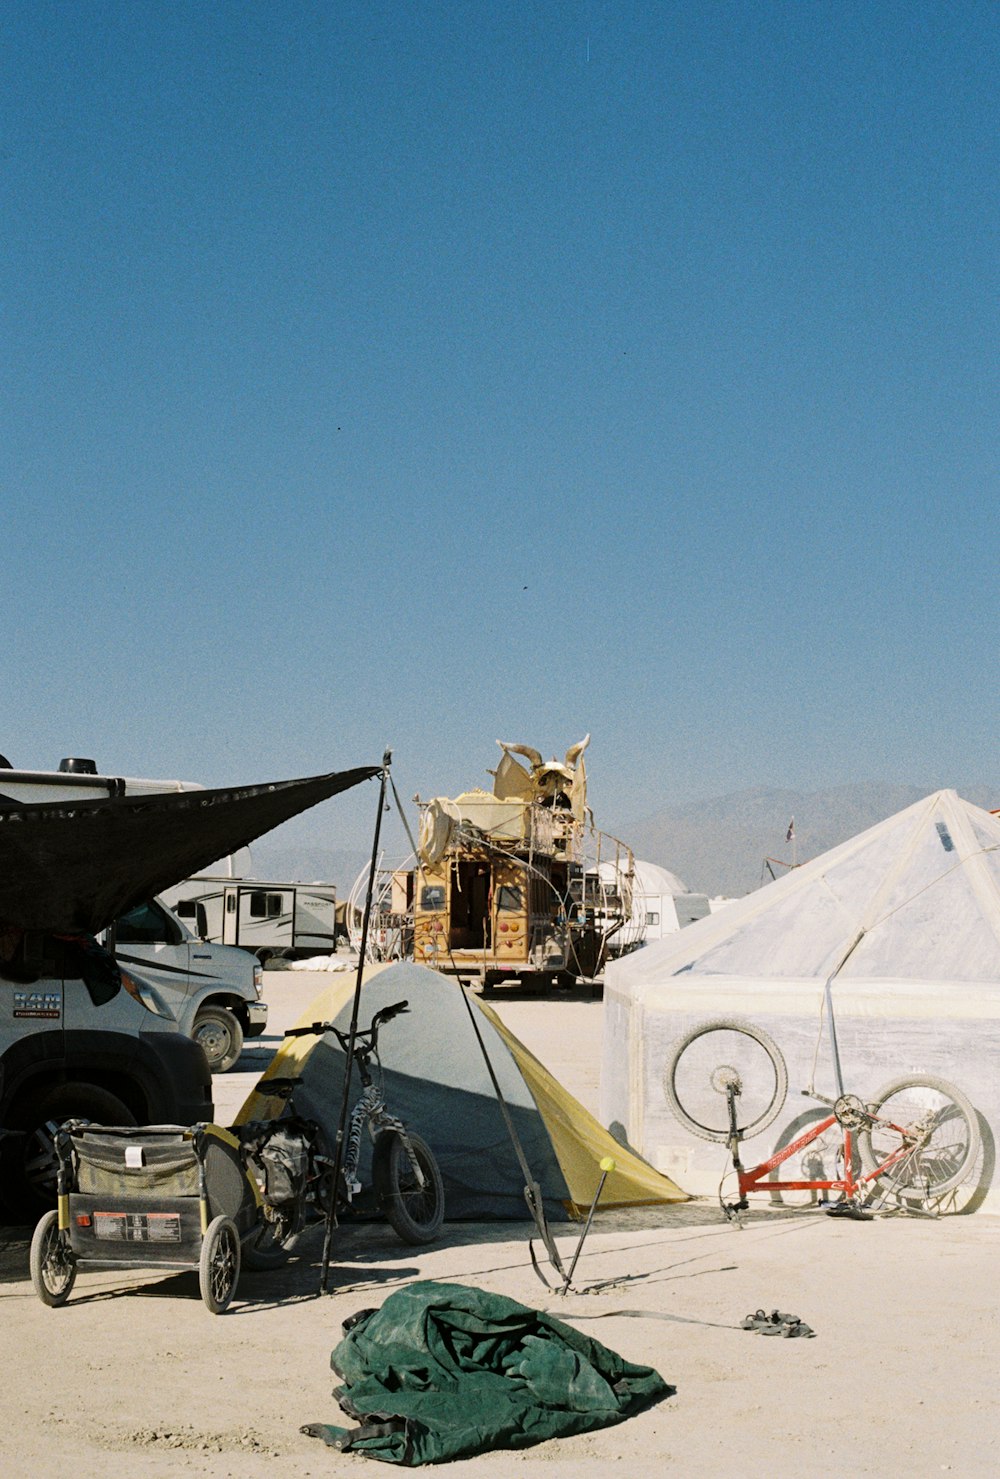 a tent, bike, and camper in the desert